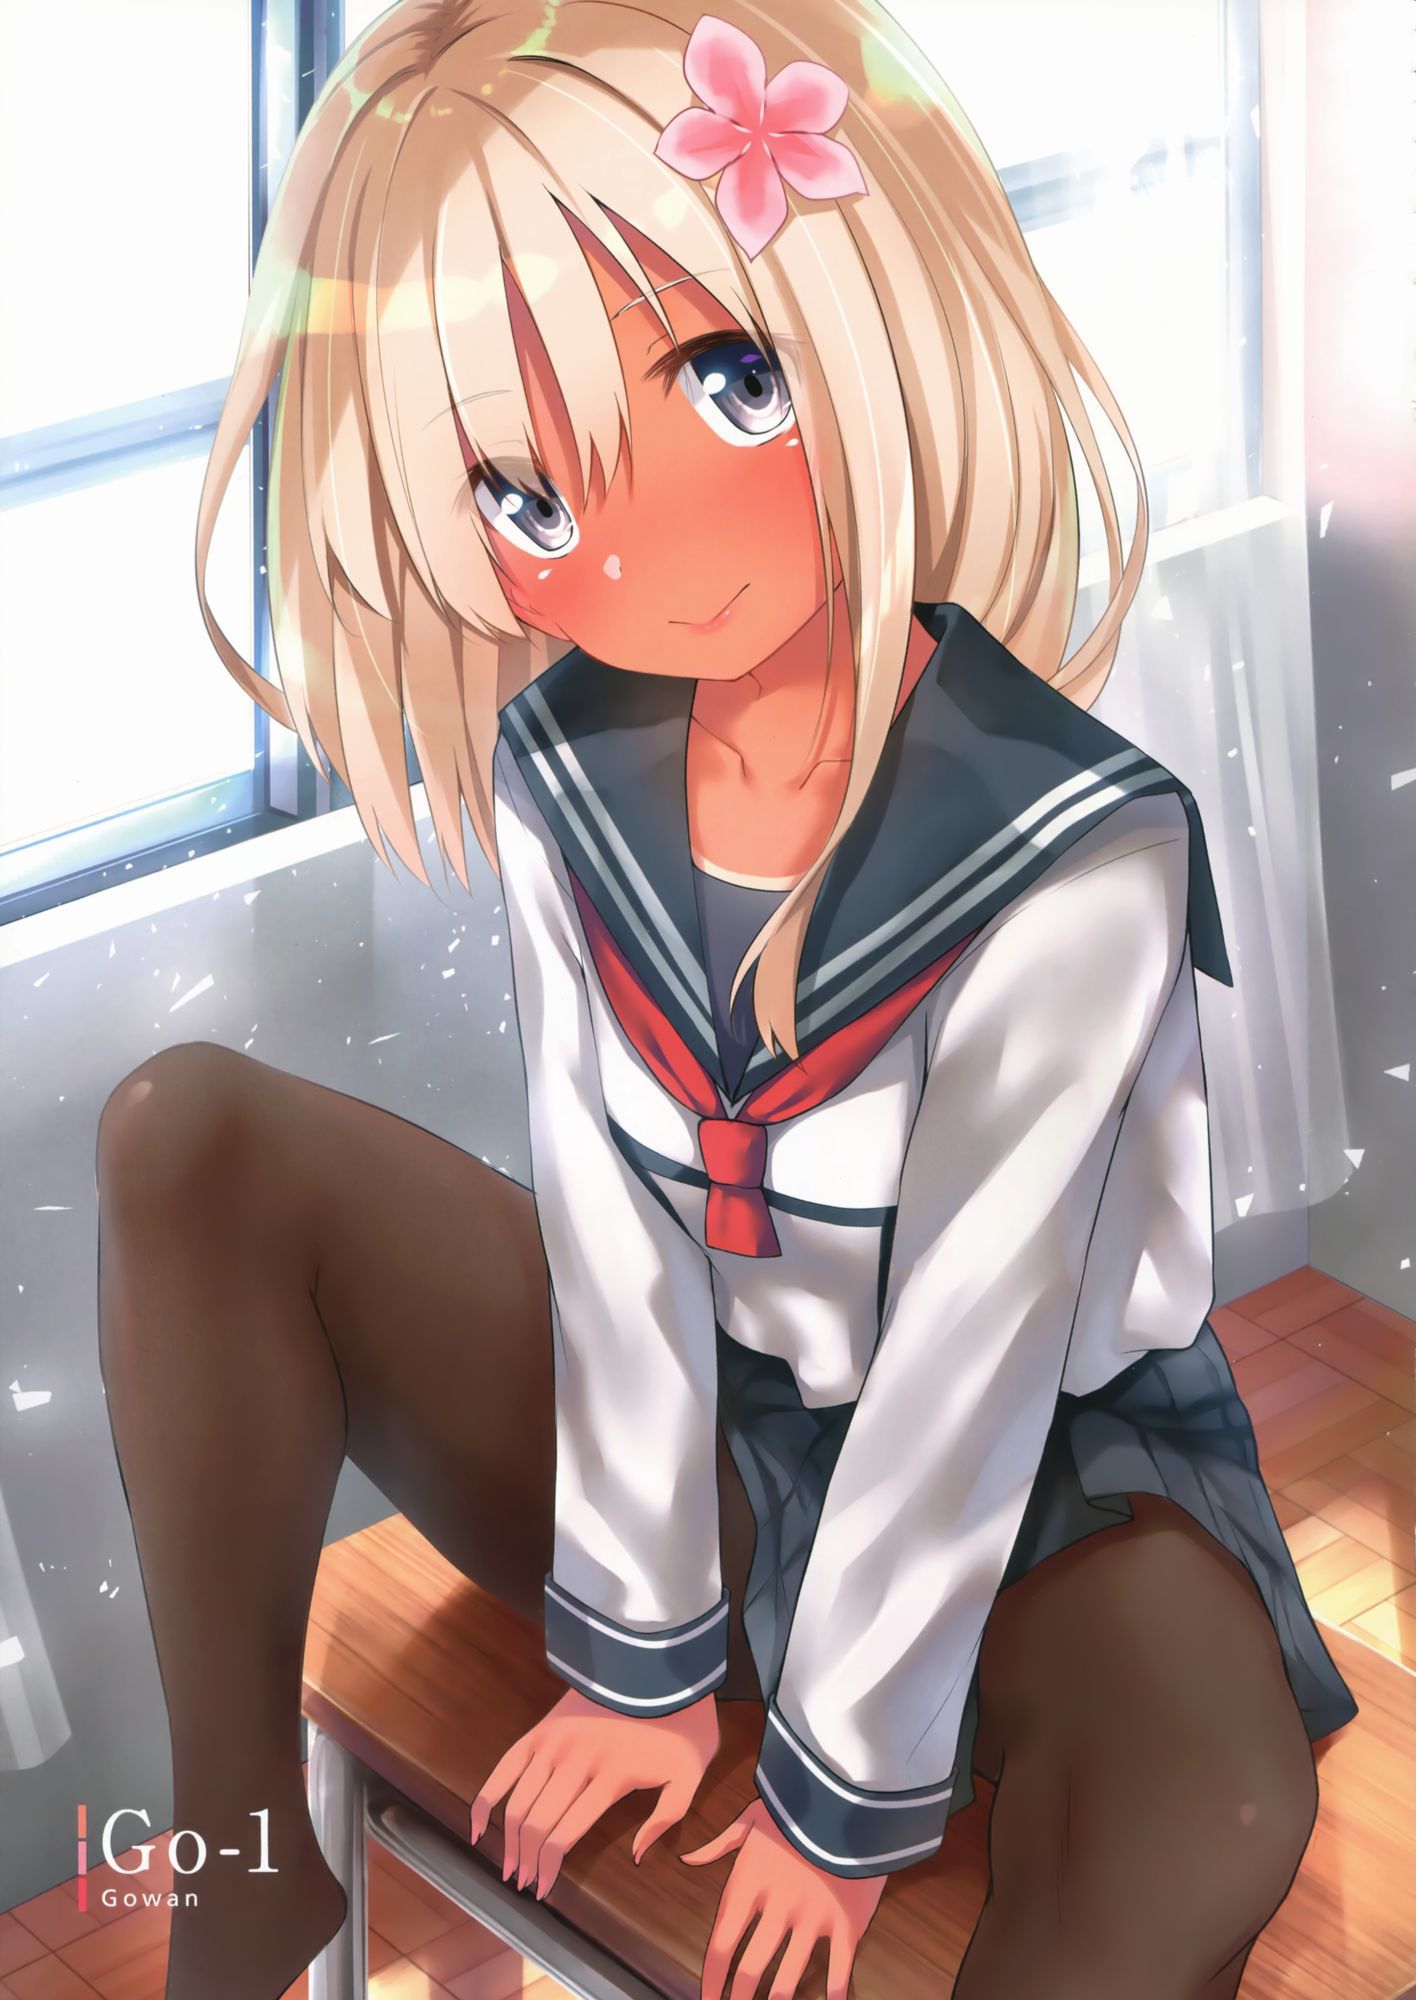 [Secondary] secondary image of a pretty girl wearing a school uniform Part 20 [uniform, non-erotic] 11